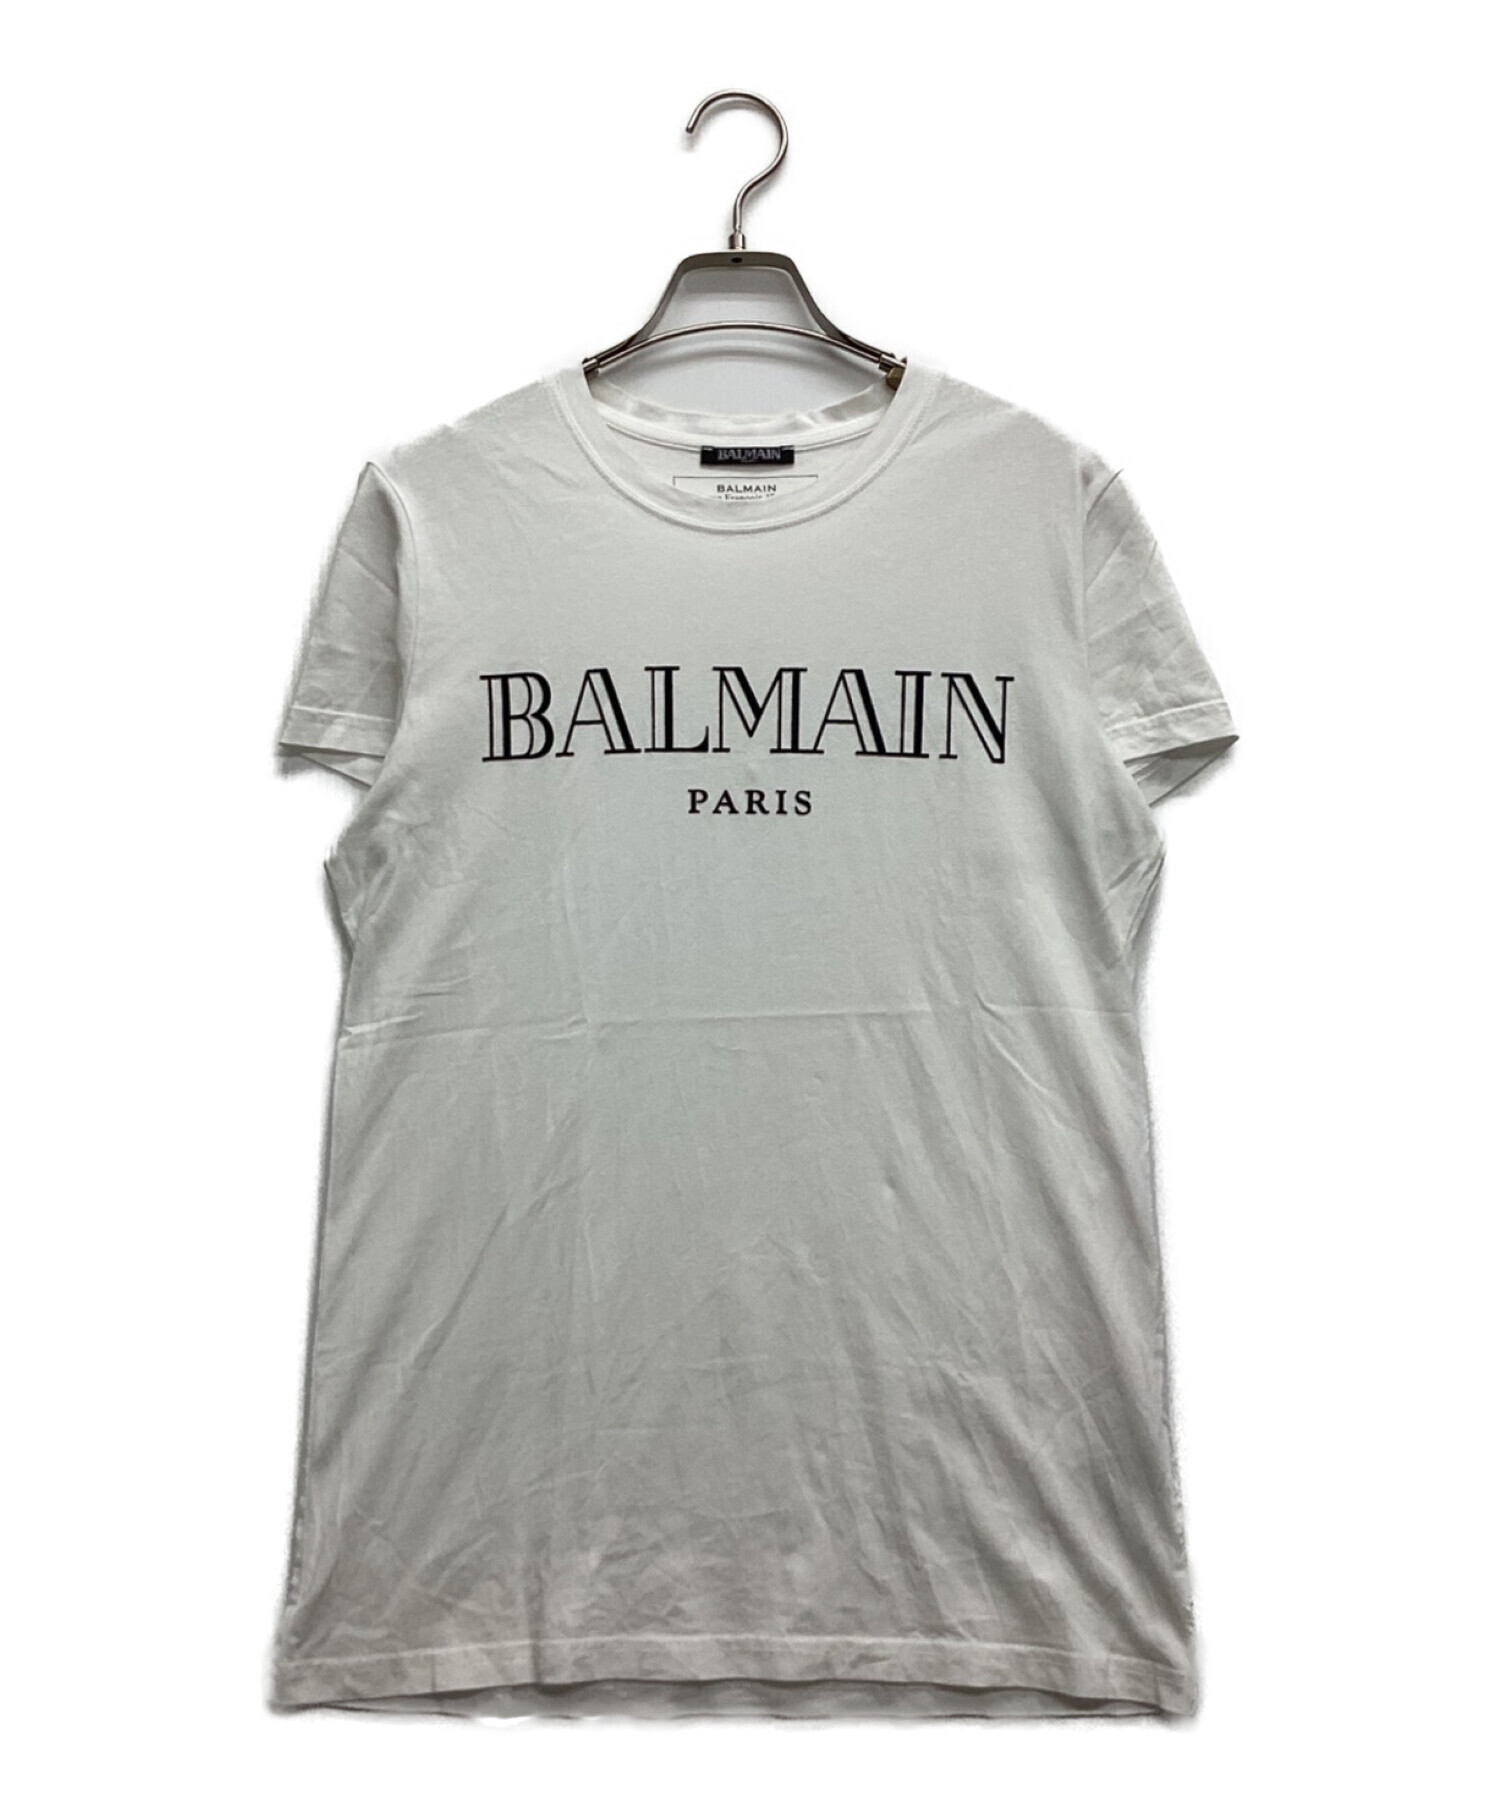 BALMAIN (バルマン) プリントTシャツ ホワイト サイズ:XS